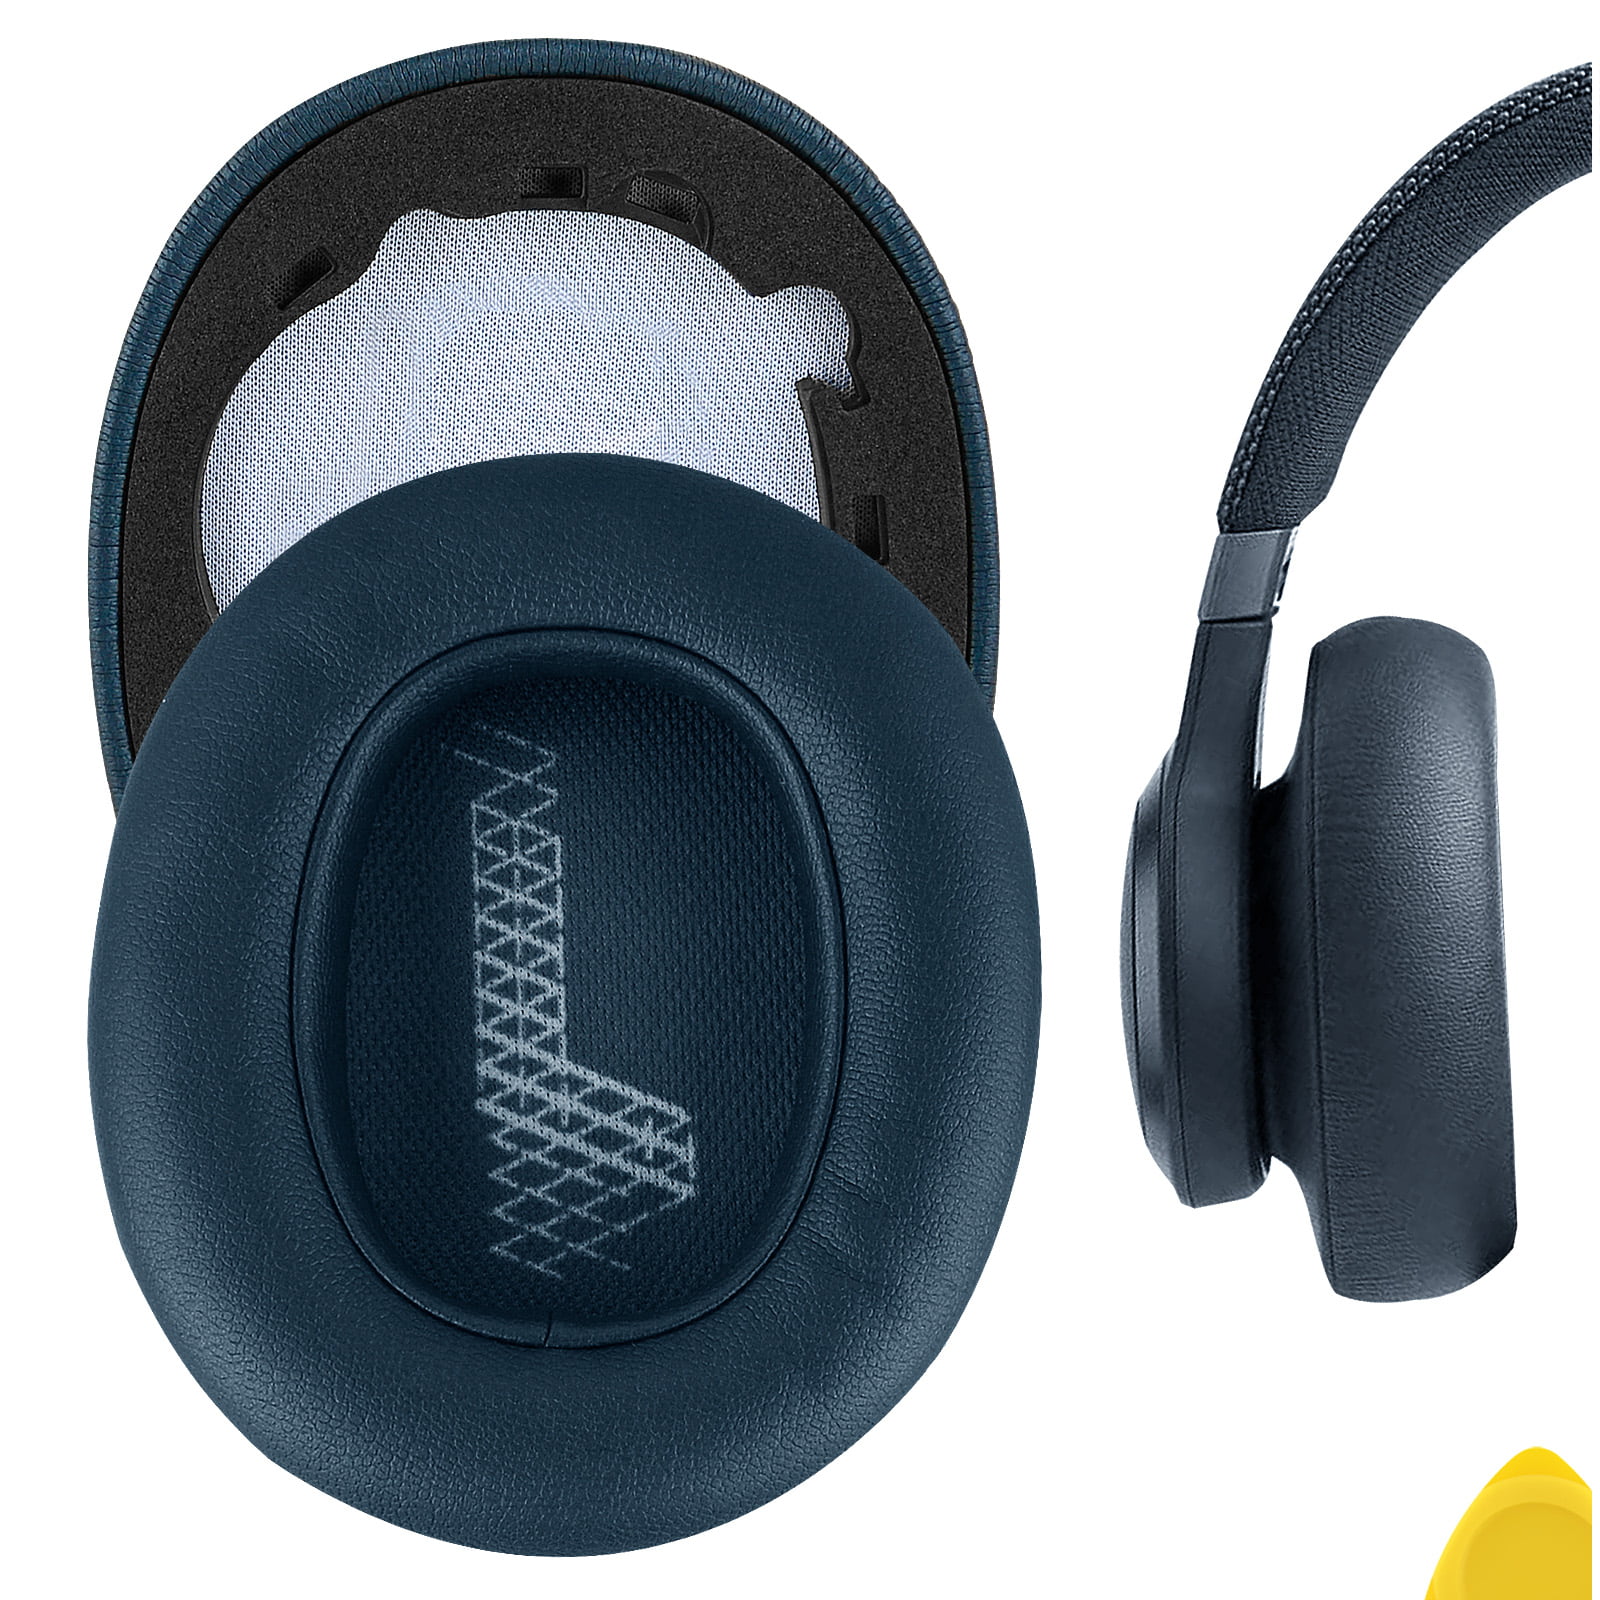 Alperne Kritisk Rettsmedicin Geekria QuickFit Replacement Ear Pads for JBL Live 650 BTNC, Lifestyle  E65BTNC, Duet NC, Live 660 NC Headphones Ear Cushions, Headset Earpads, Ear  Cups Repair Parts (Blue) - Walmart.com